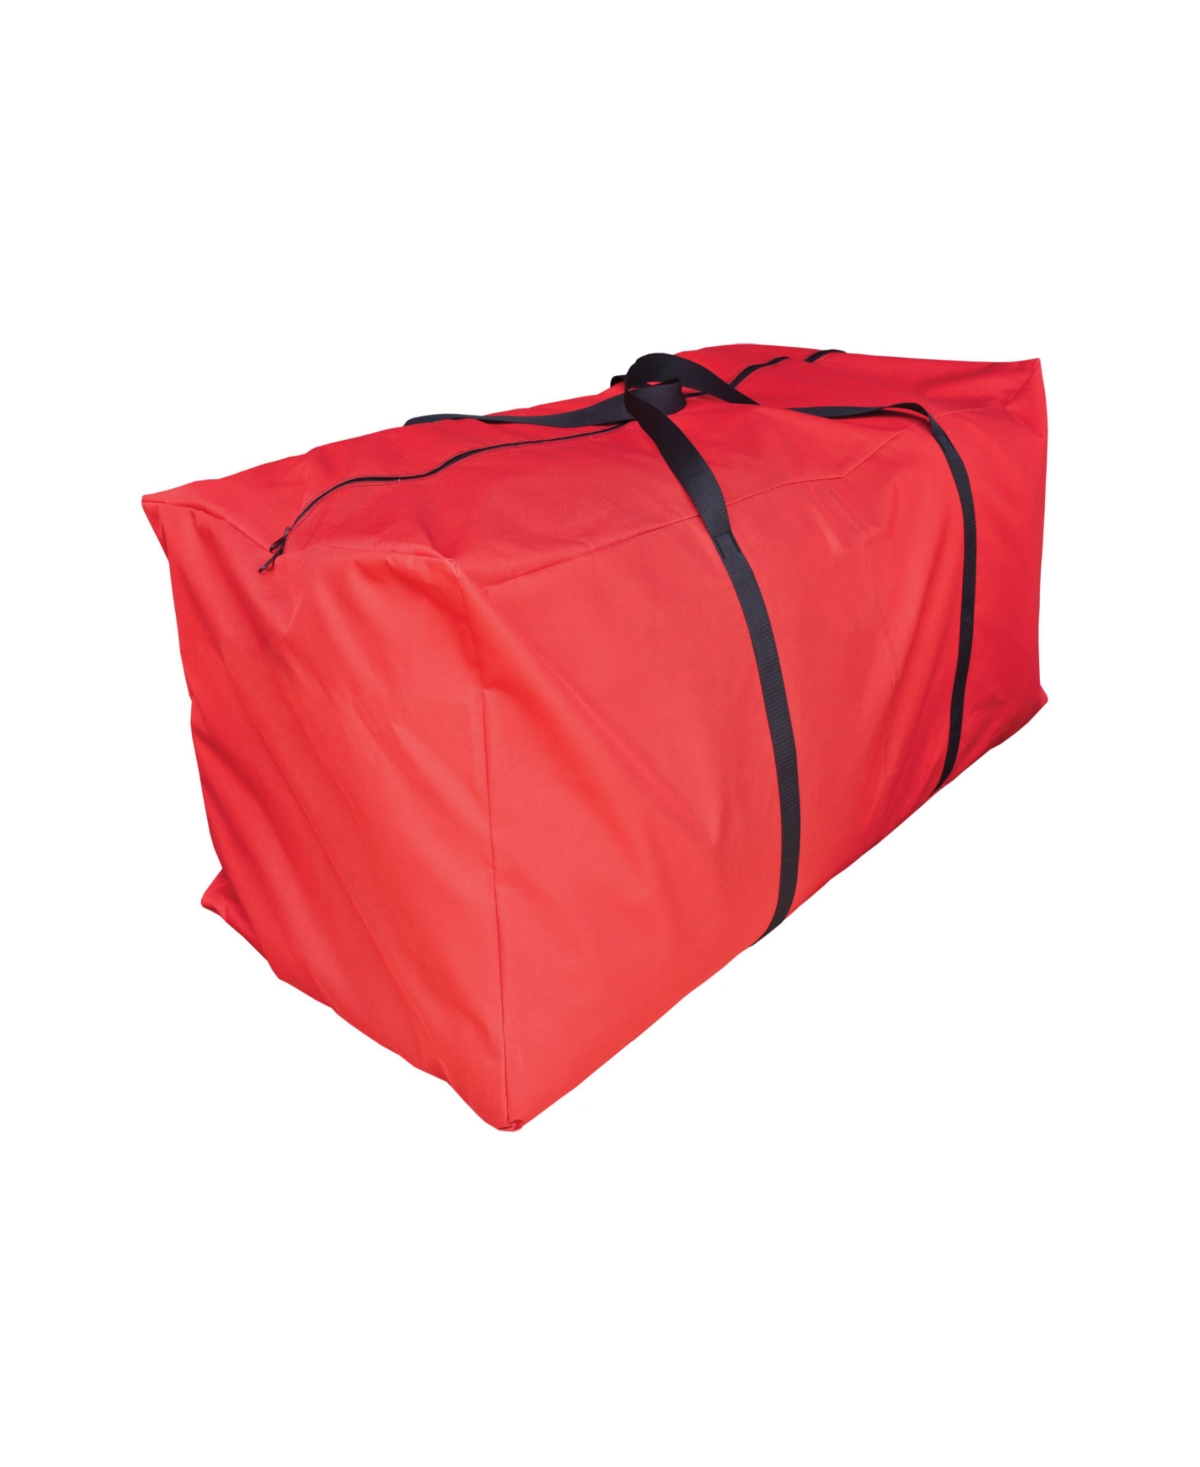 Large Christmas Holiday Storage Bag - Red